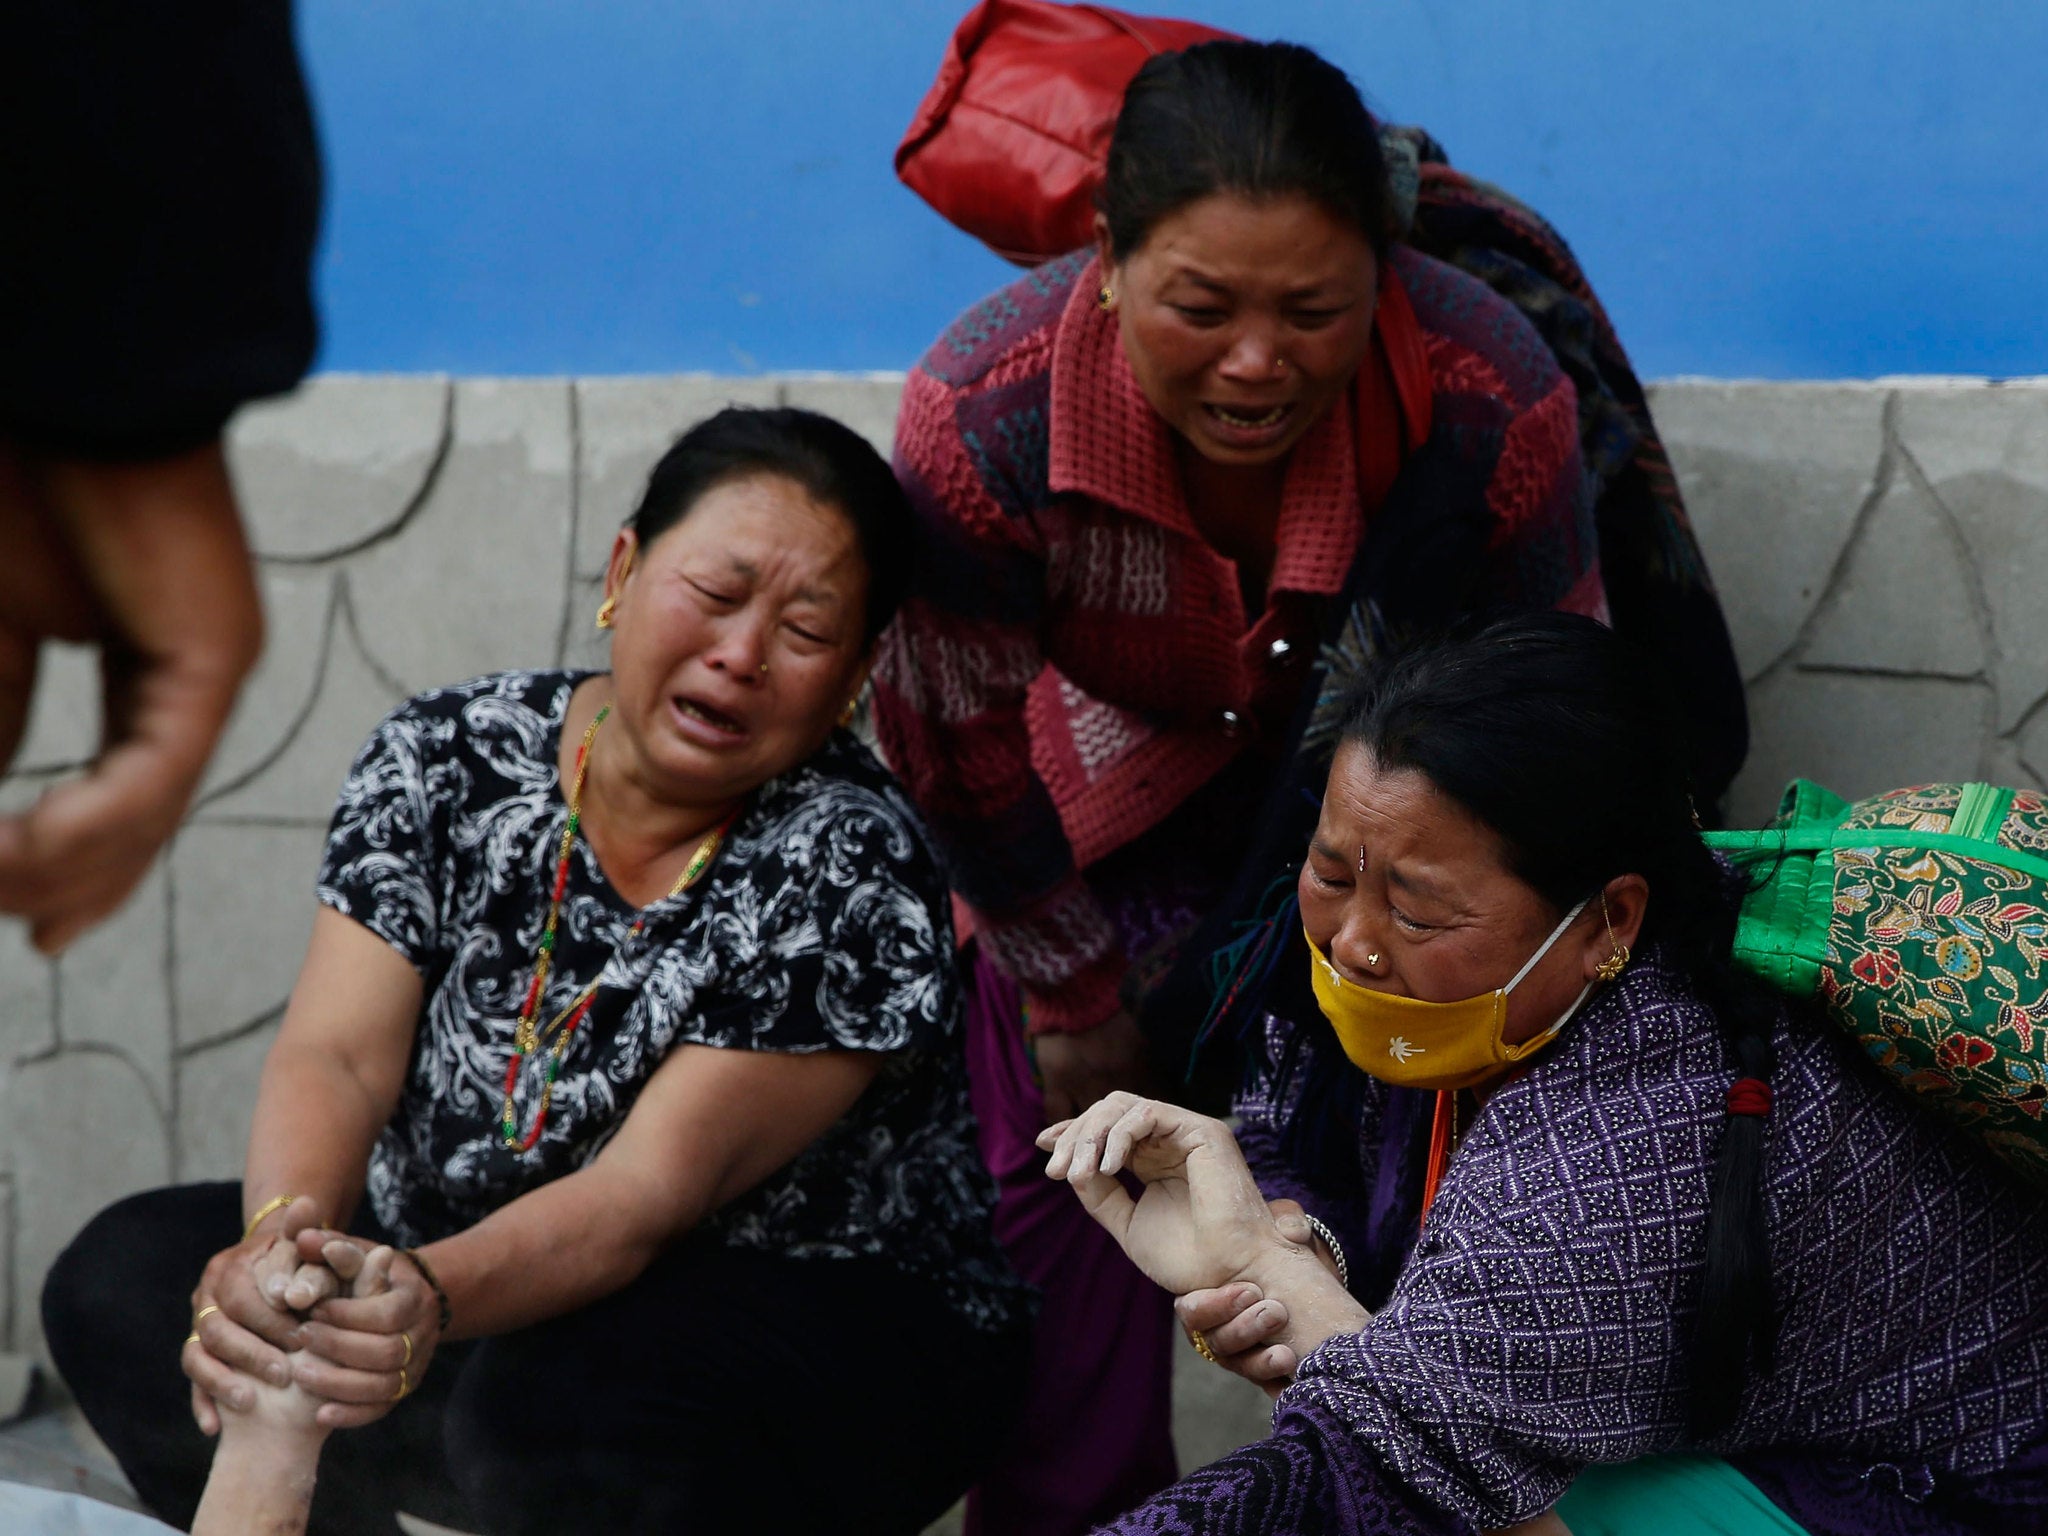 Relatives cry over a dead body of a victim at Bir Hospital in Kathmandu